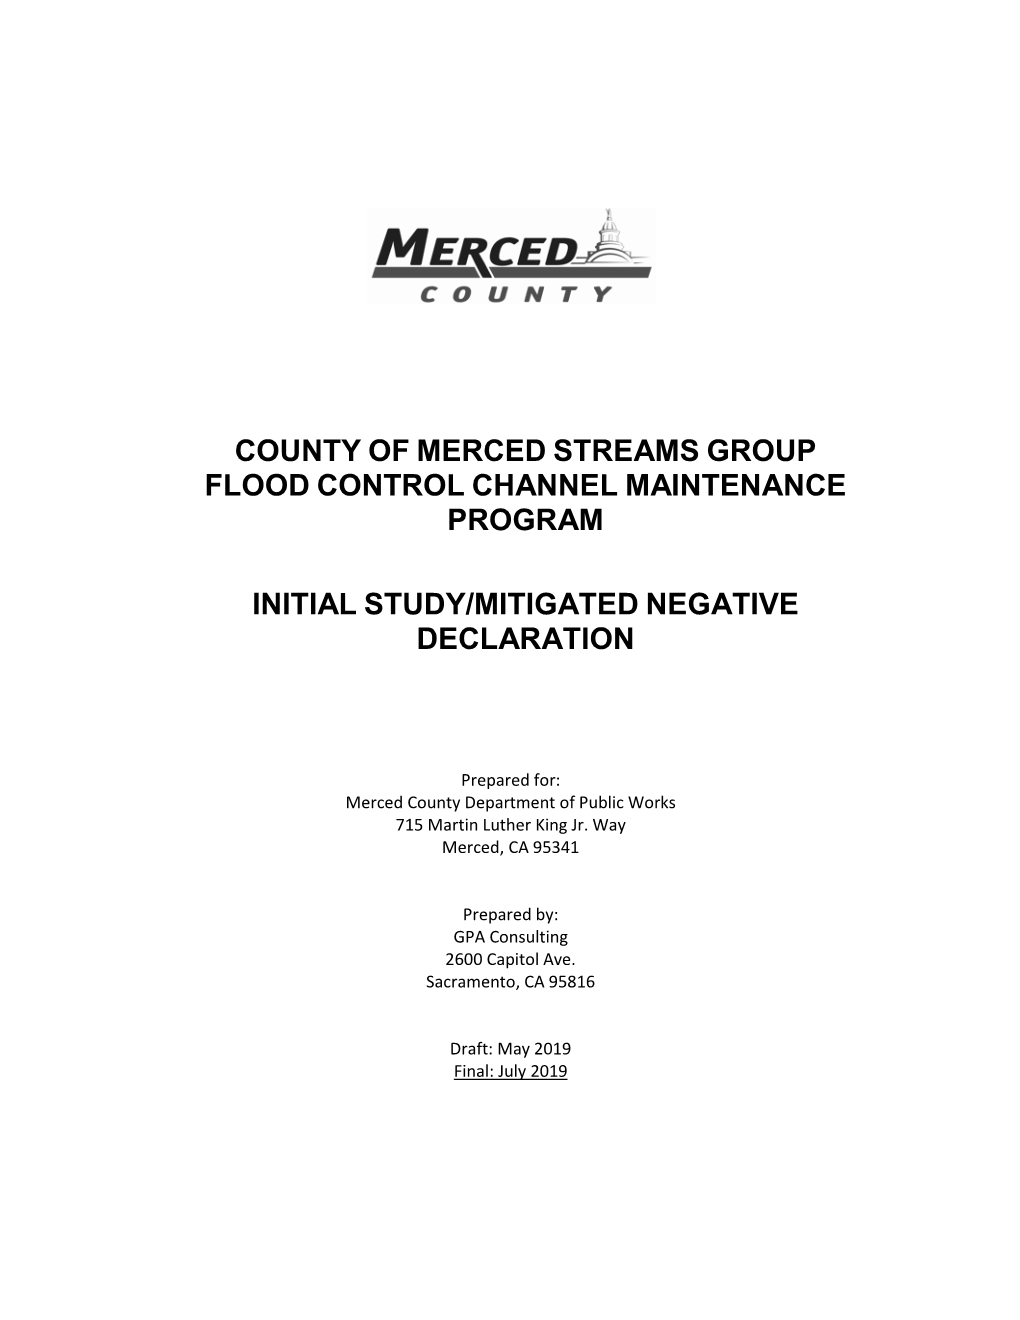 County of Merced Streams Group Flood Control Channel Maintenance Program